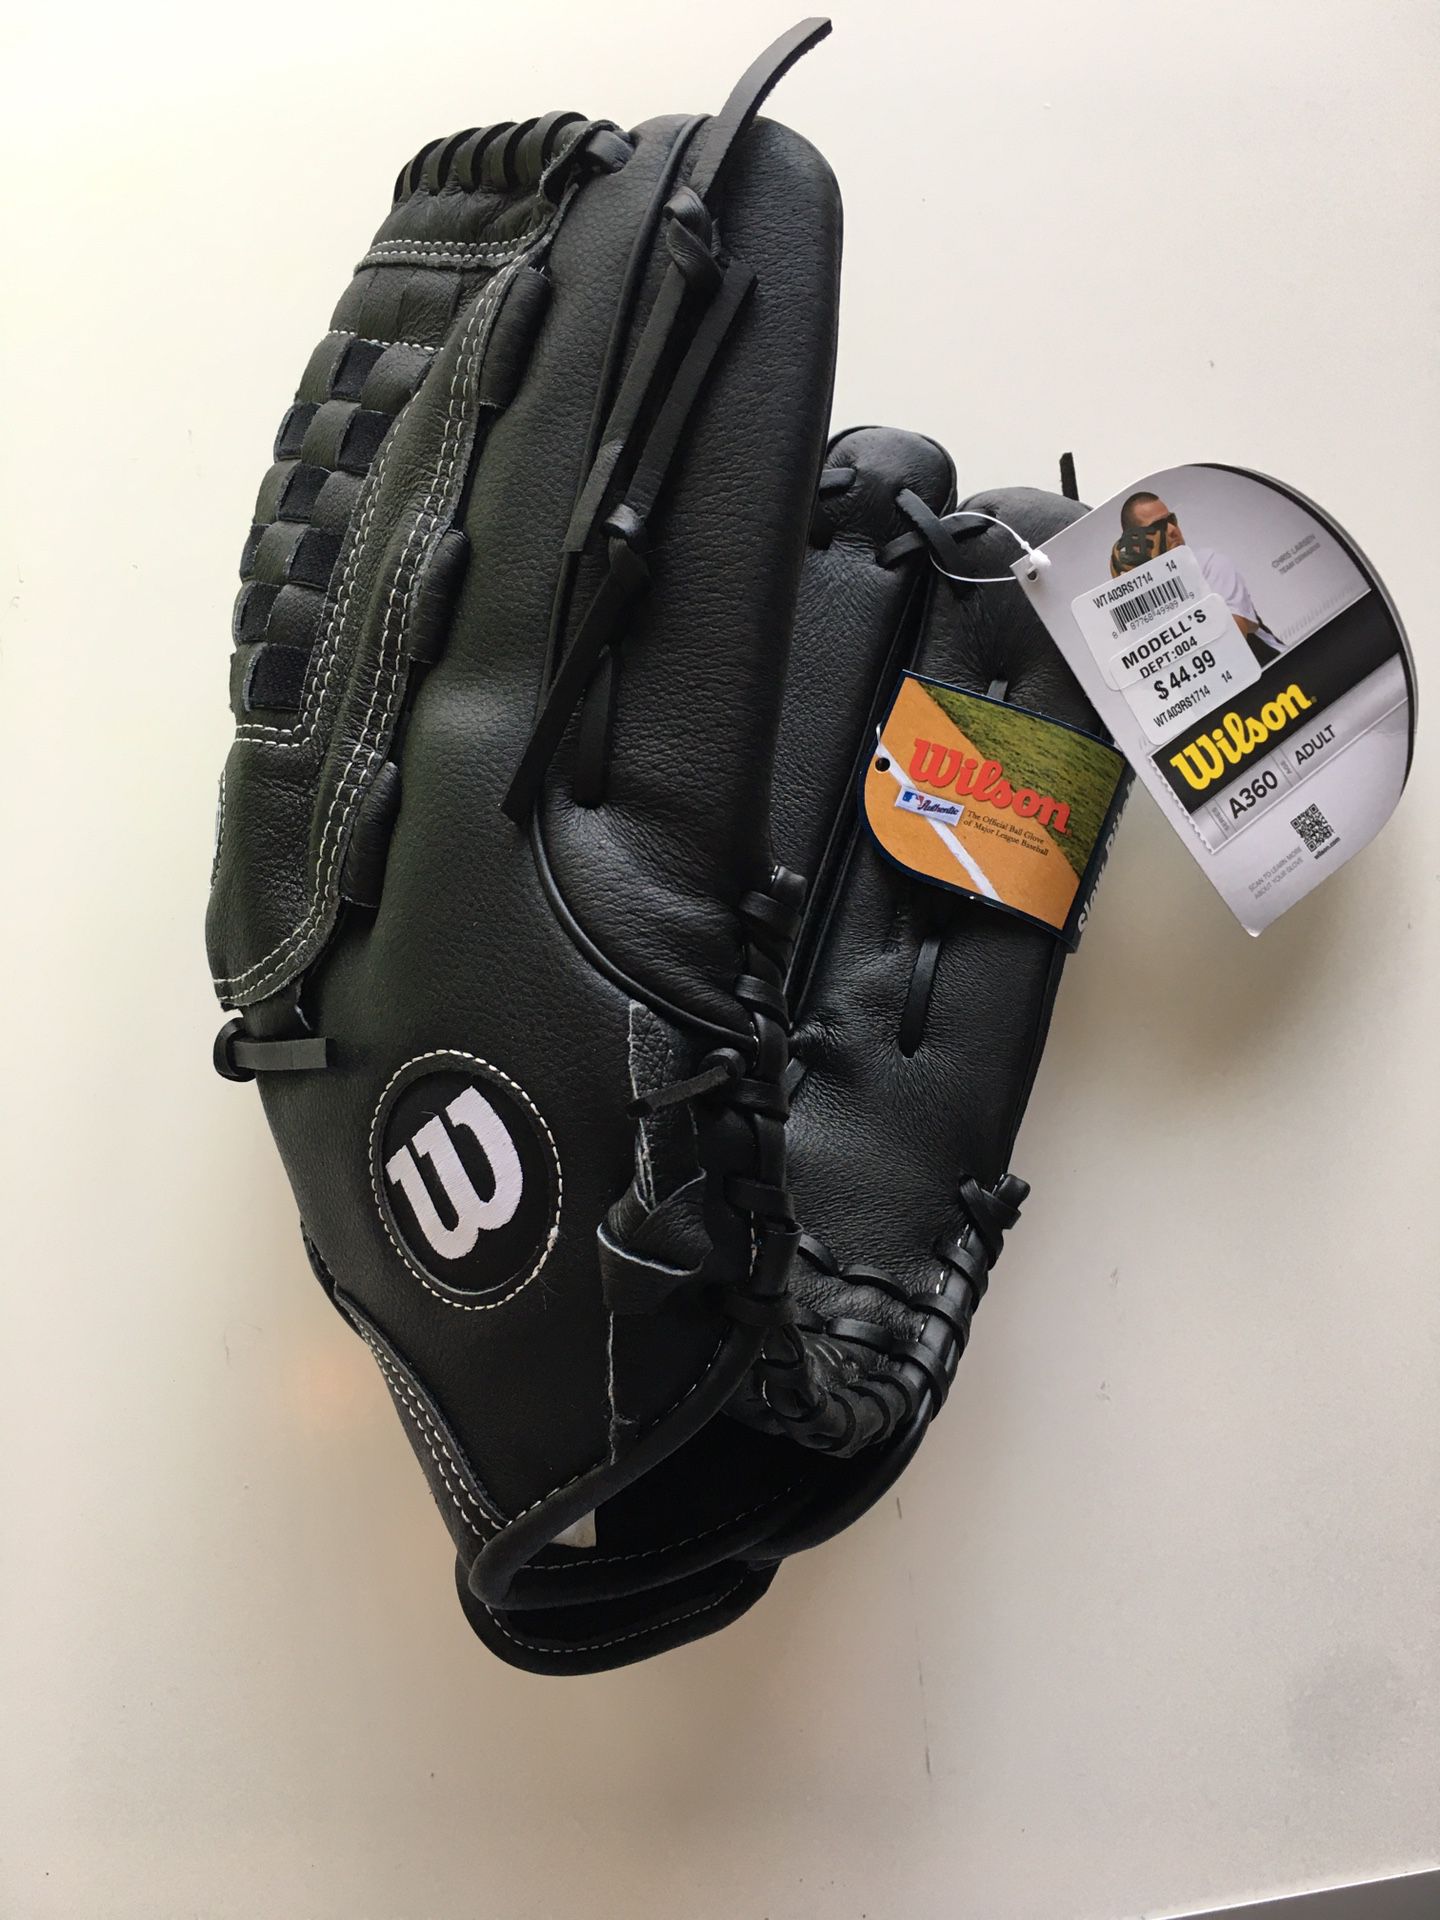 Softball Glove $25